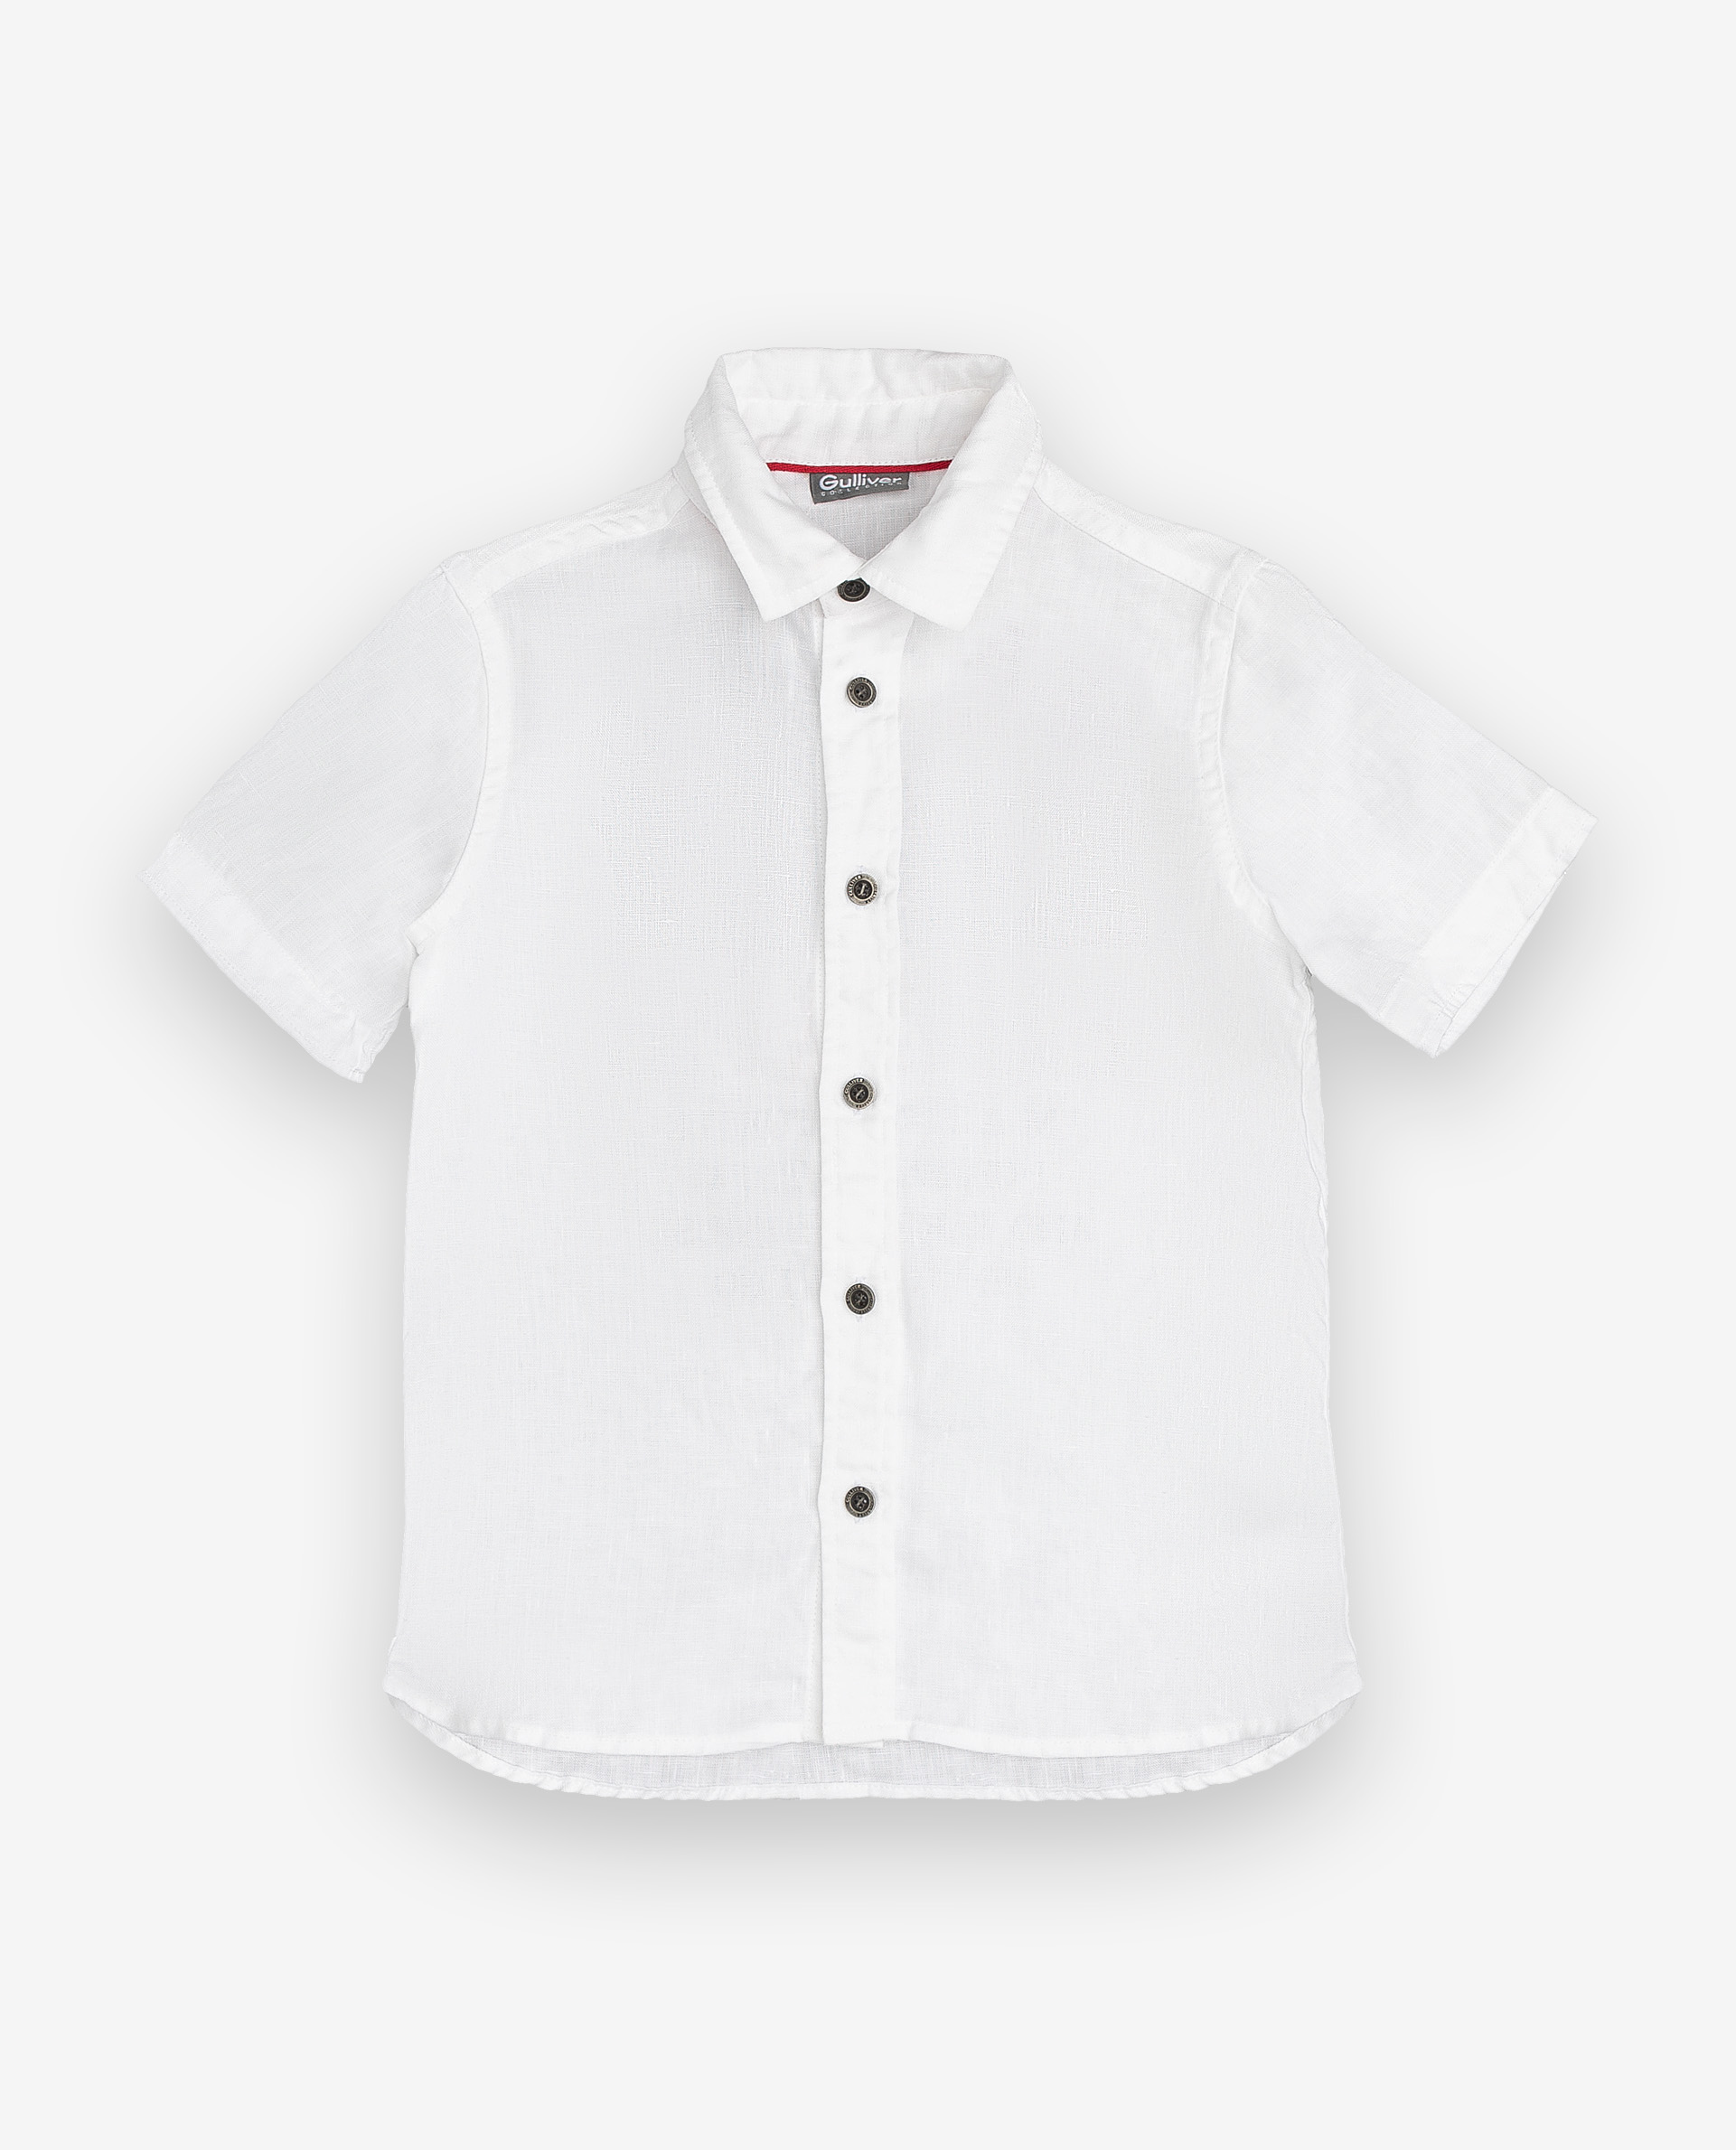 Белая рубашка с коротким рукавом Gulliver 12005BMC2304, размер 122, цвет белый - фото 5